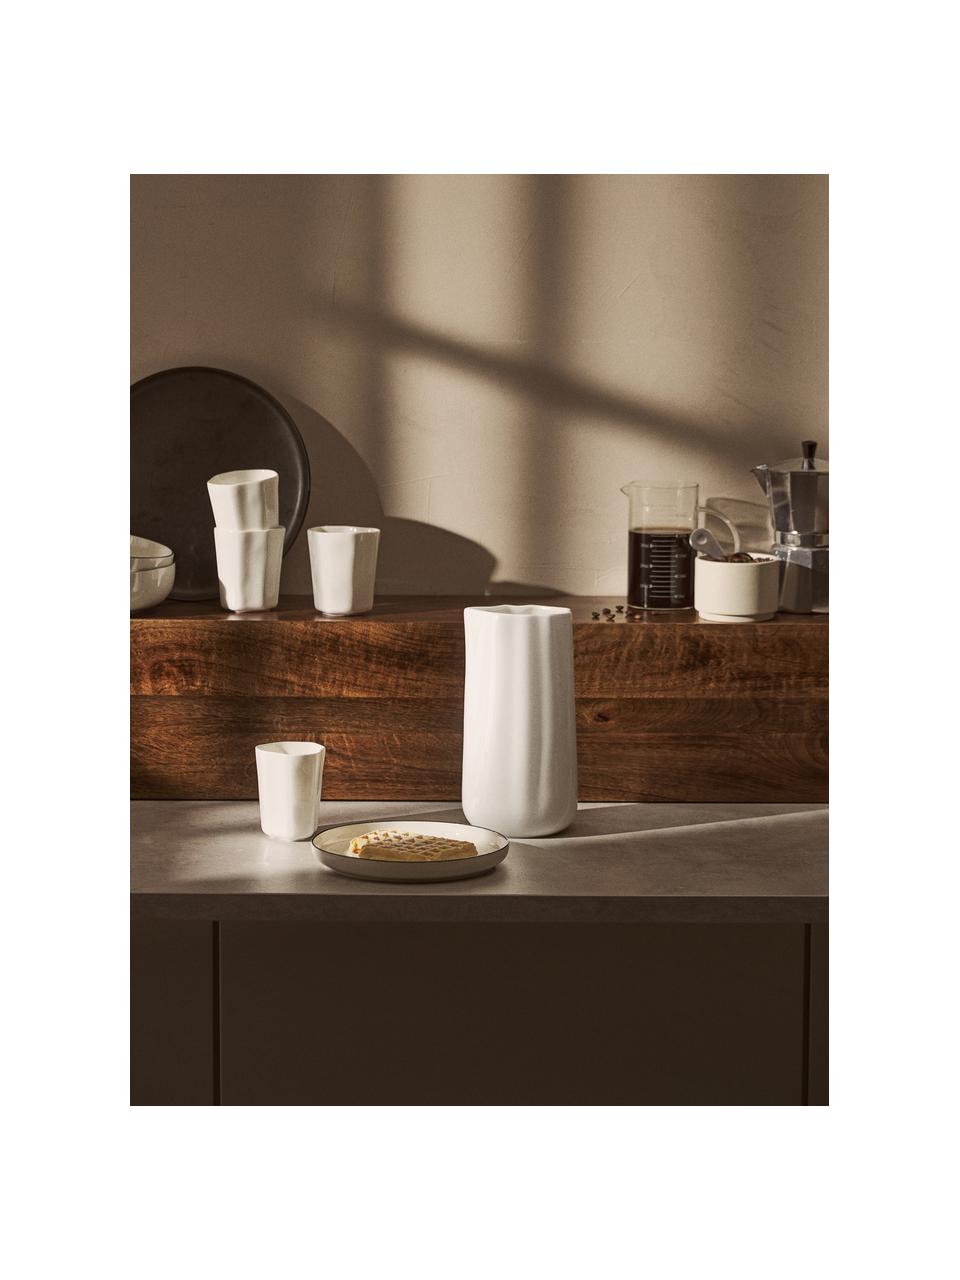 Tazas de café de porcelana con forma orgánica Joana, 4 uds., Porcelana, Blanco, Ø 7 x Al 10 cm, 240 ml